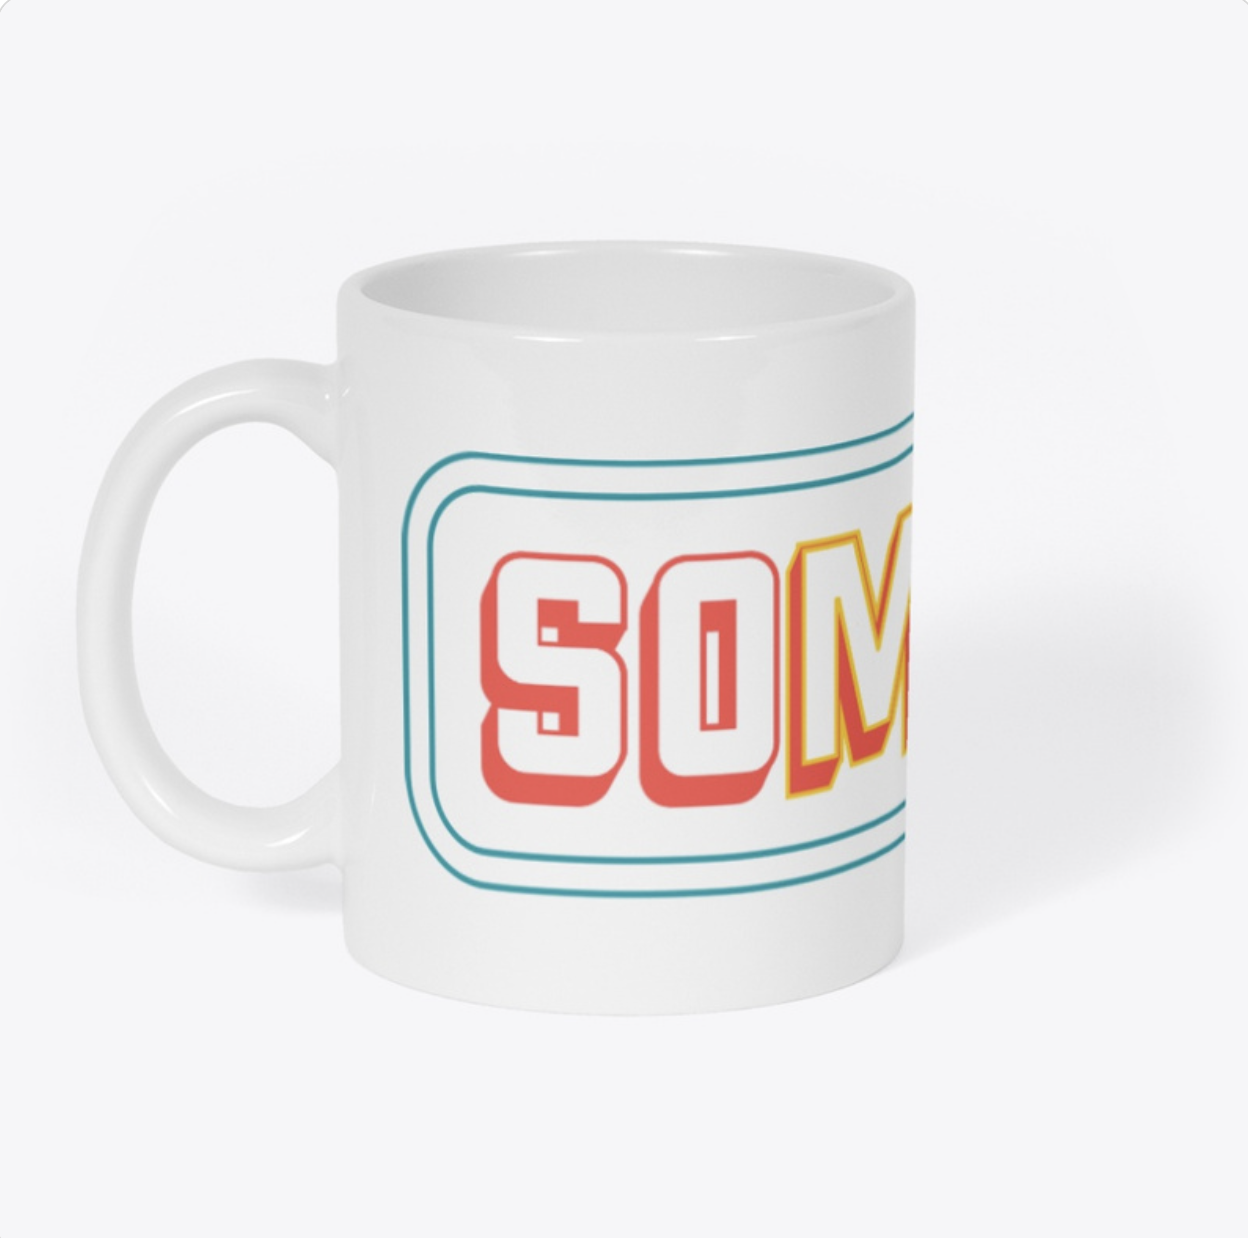 SOMAPSO Mug - $16.99